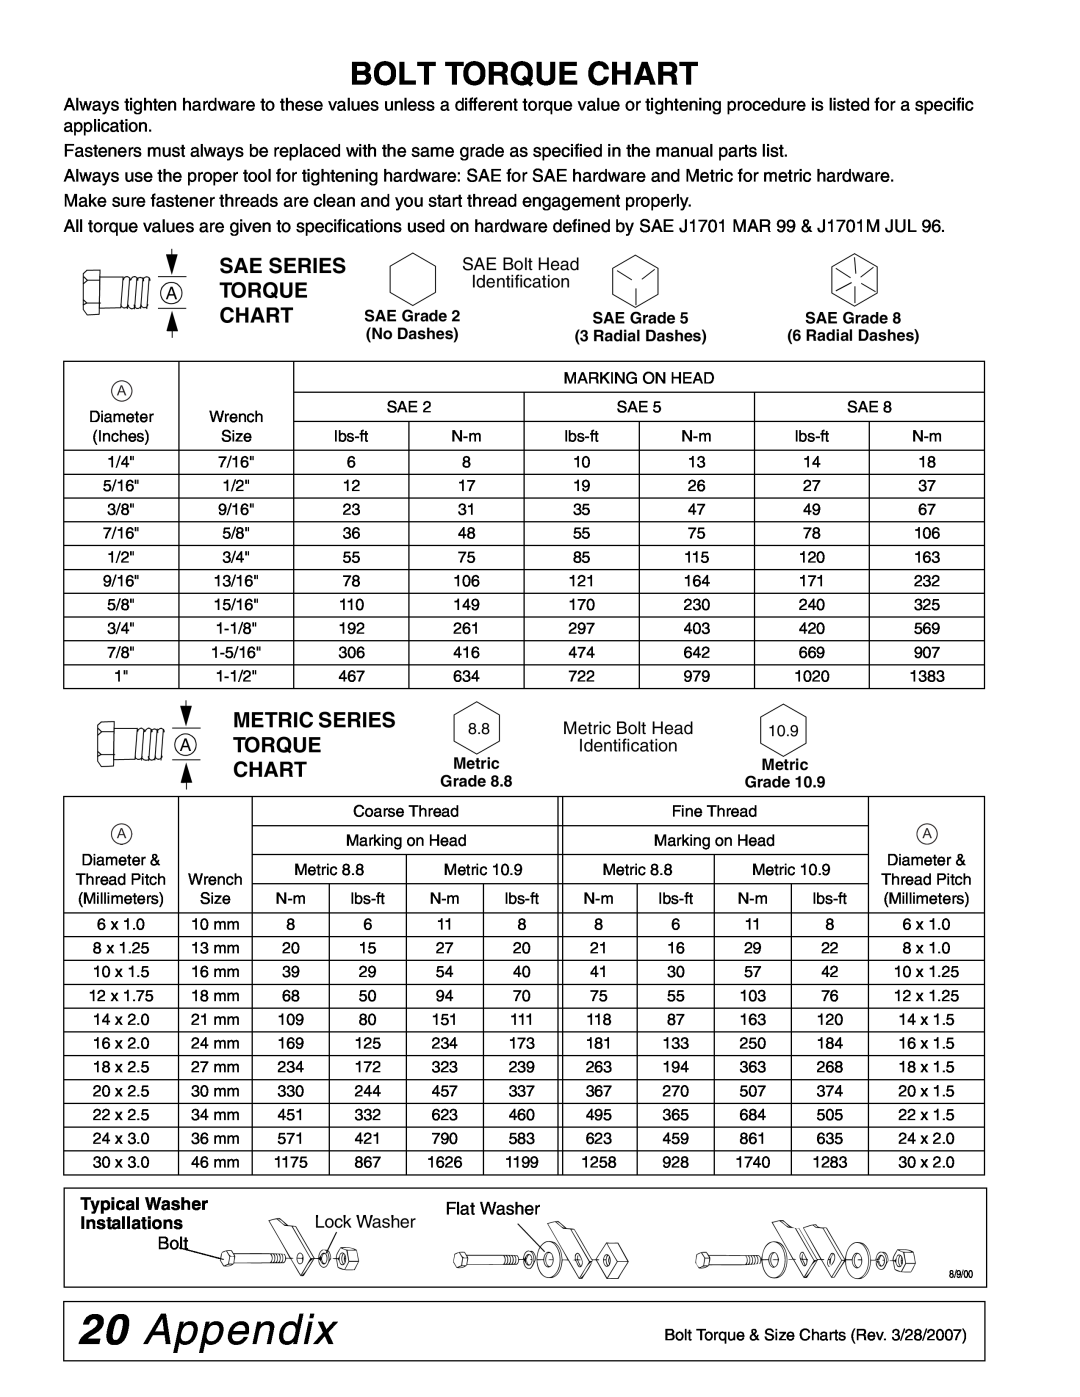 Woods Equipment BSE5, RBE5, RBE4 manual 20Appendix, Bolt Torque Chart, Sae Series A Torque Chart, Metric Series Atorque Chart 